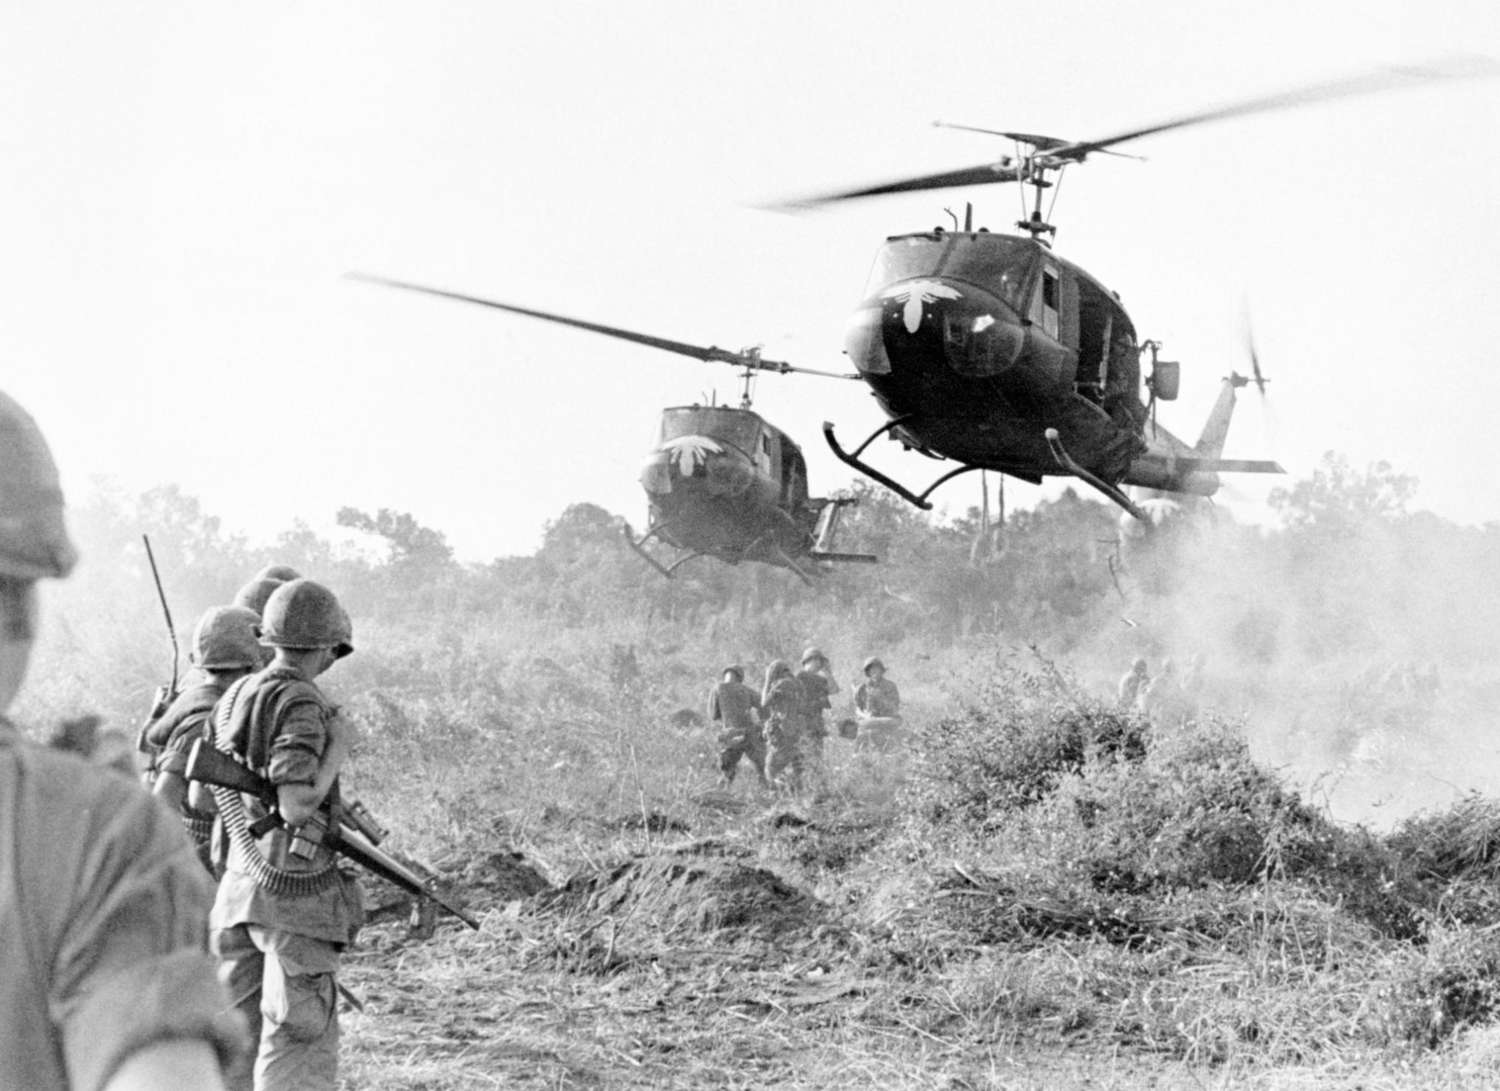 Vietnam War timeline: U.S. involvement over decades